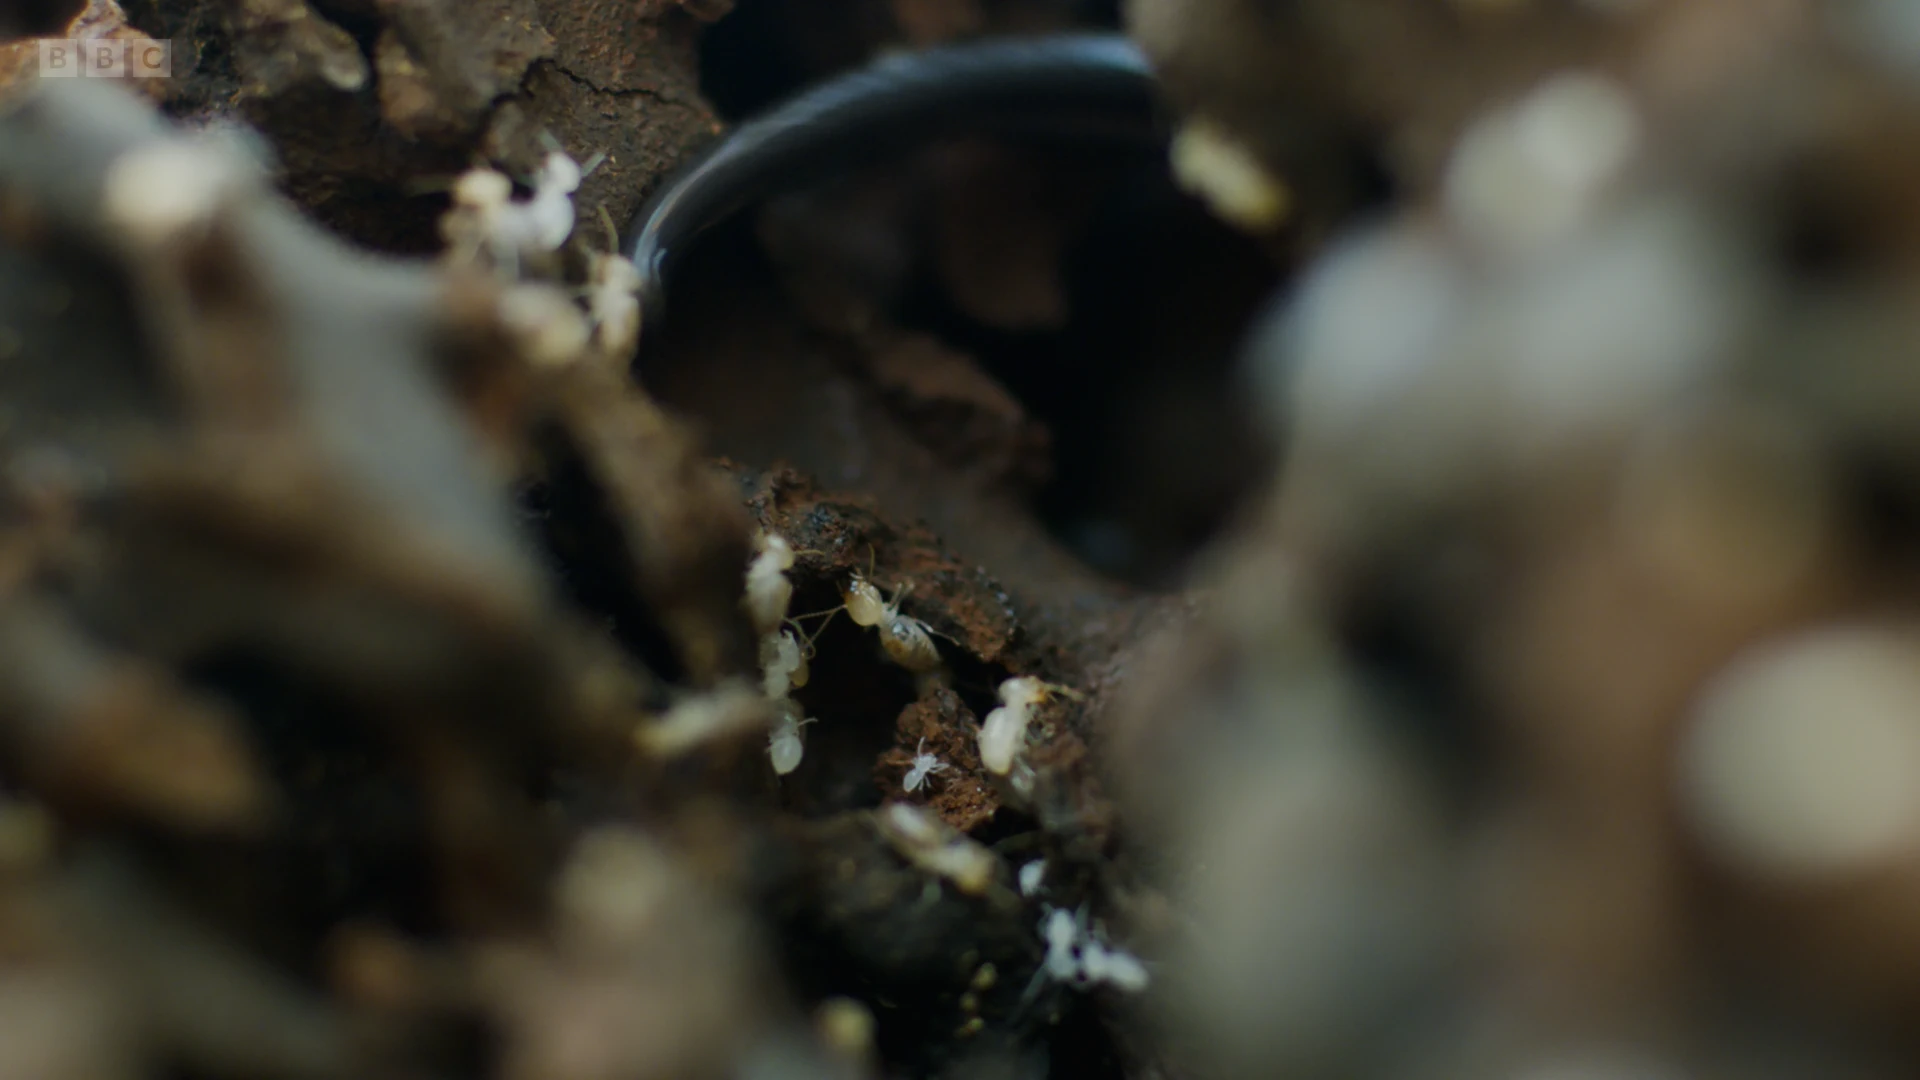 Termite sp. () as shown in Planet Earth II - Grasslands